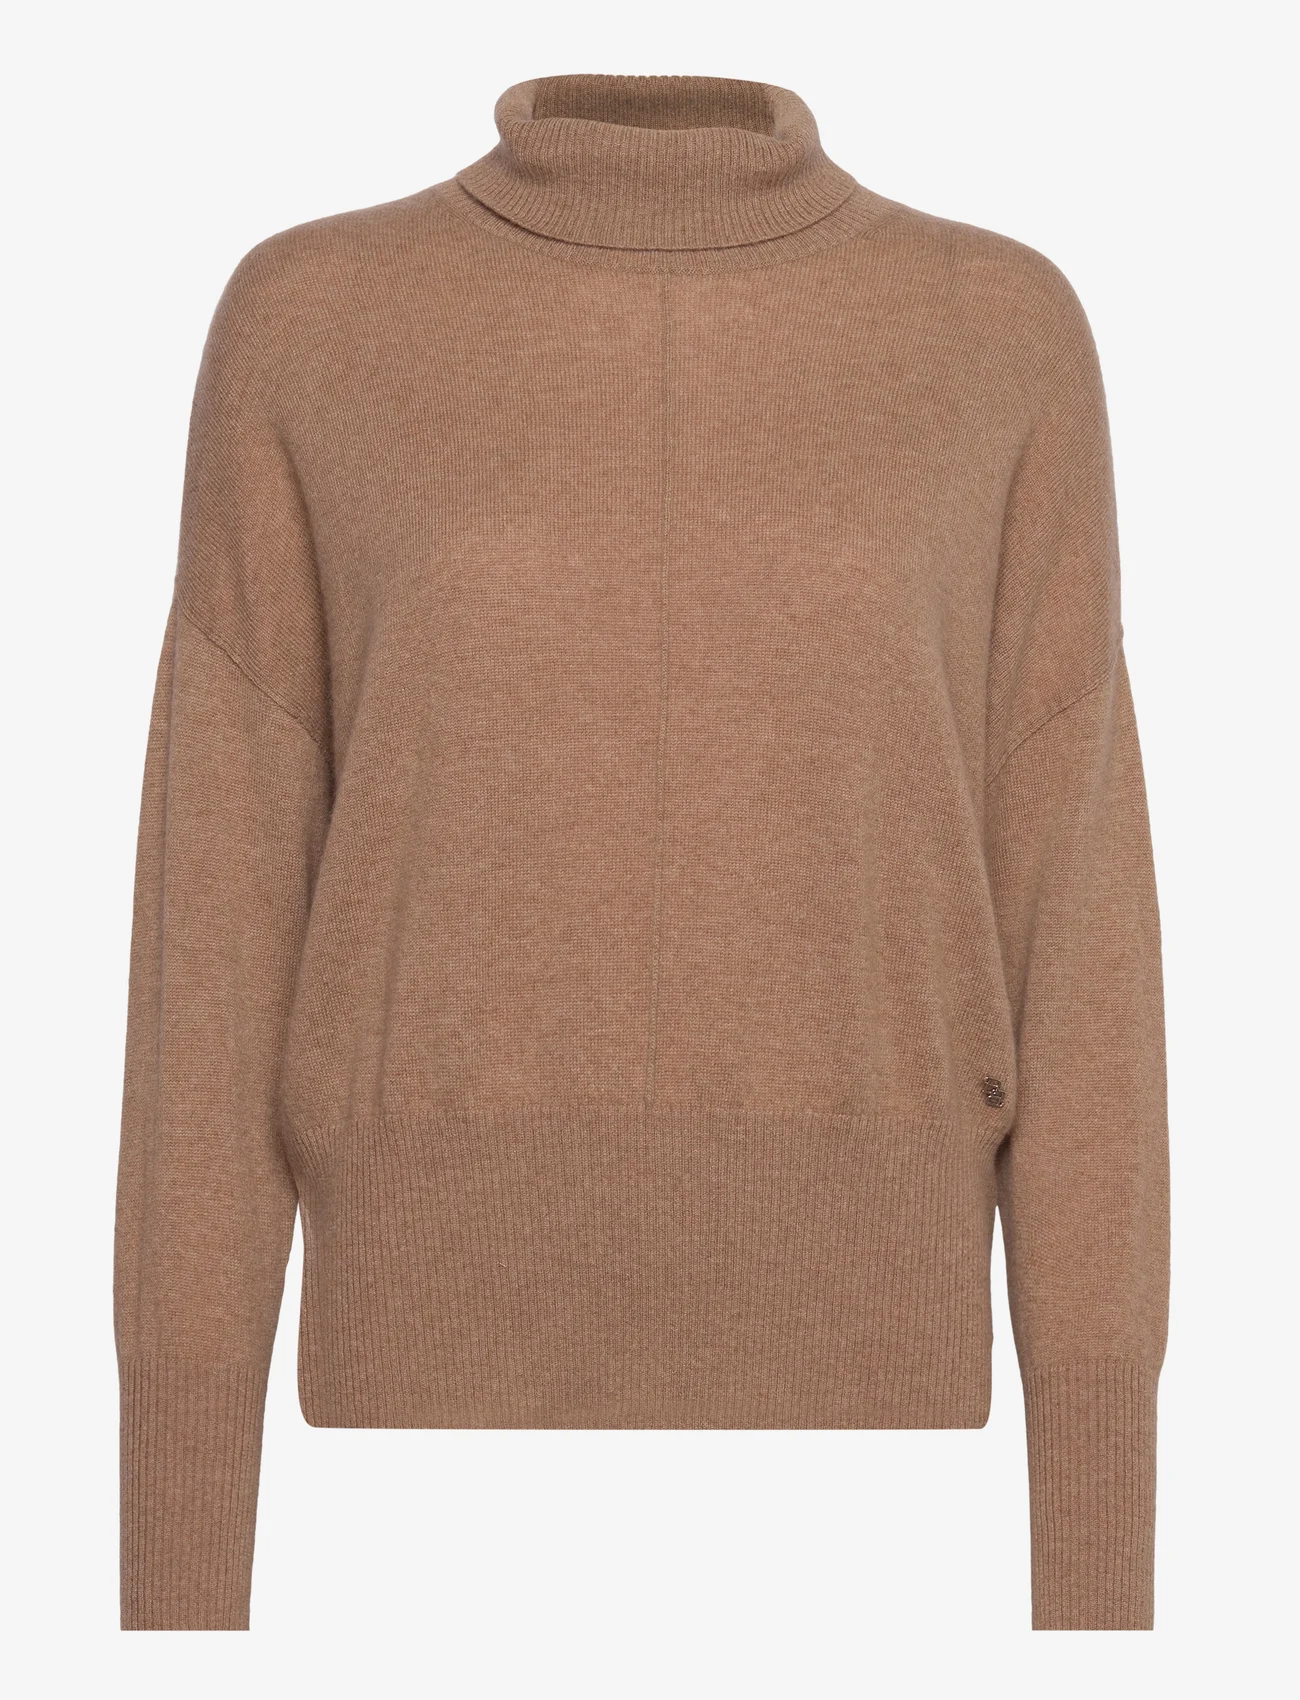 Balmuir - Mirjam cashmere sweater - kõrge kaelusega džemprid - soft camel - 0